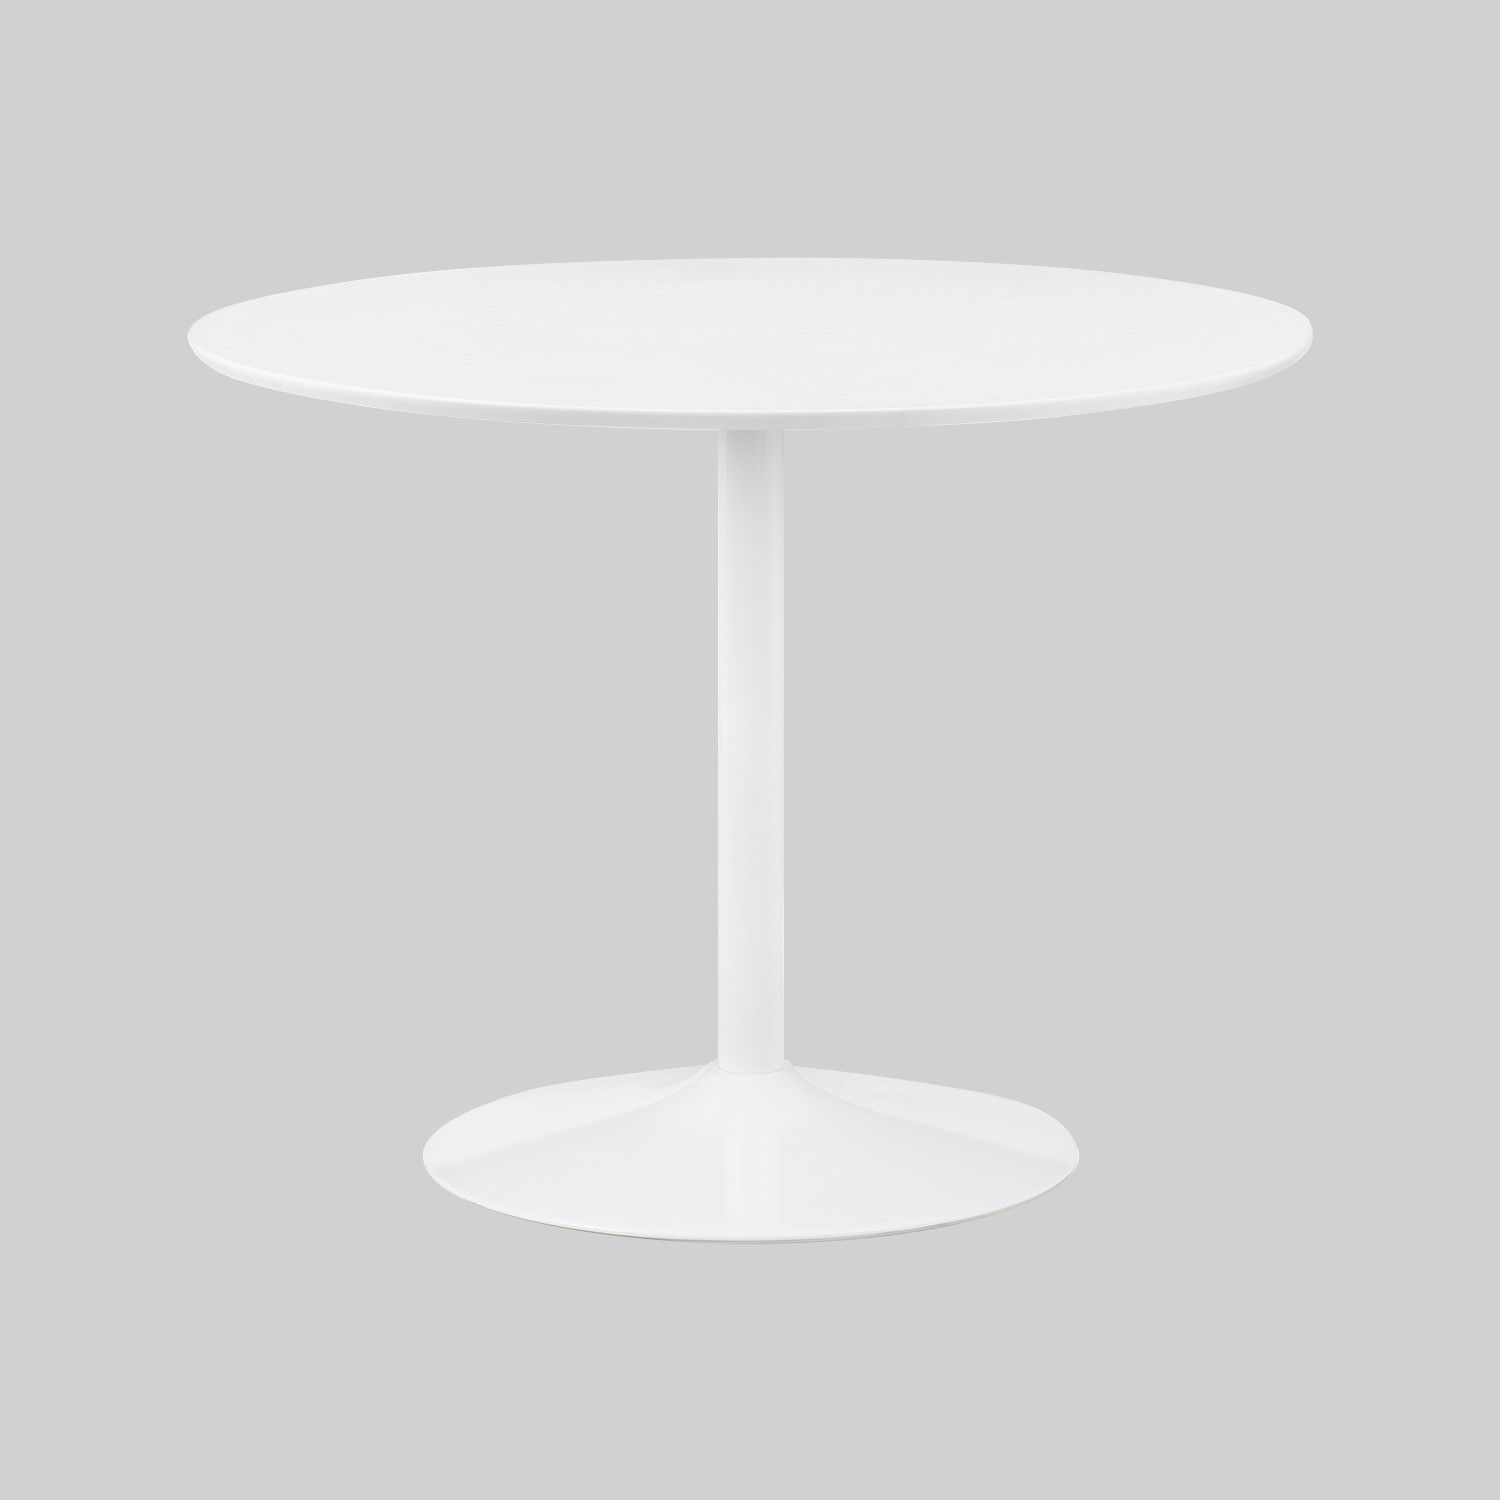 Photo of Round white dining table - seats 4 - julian bowen blanco